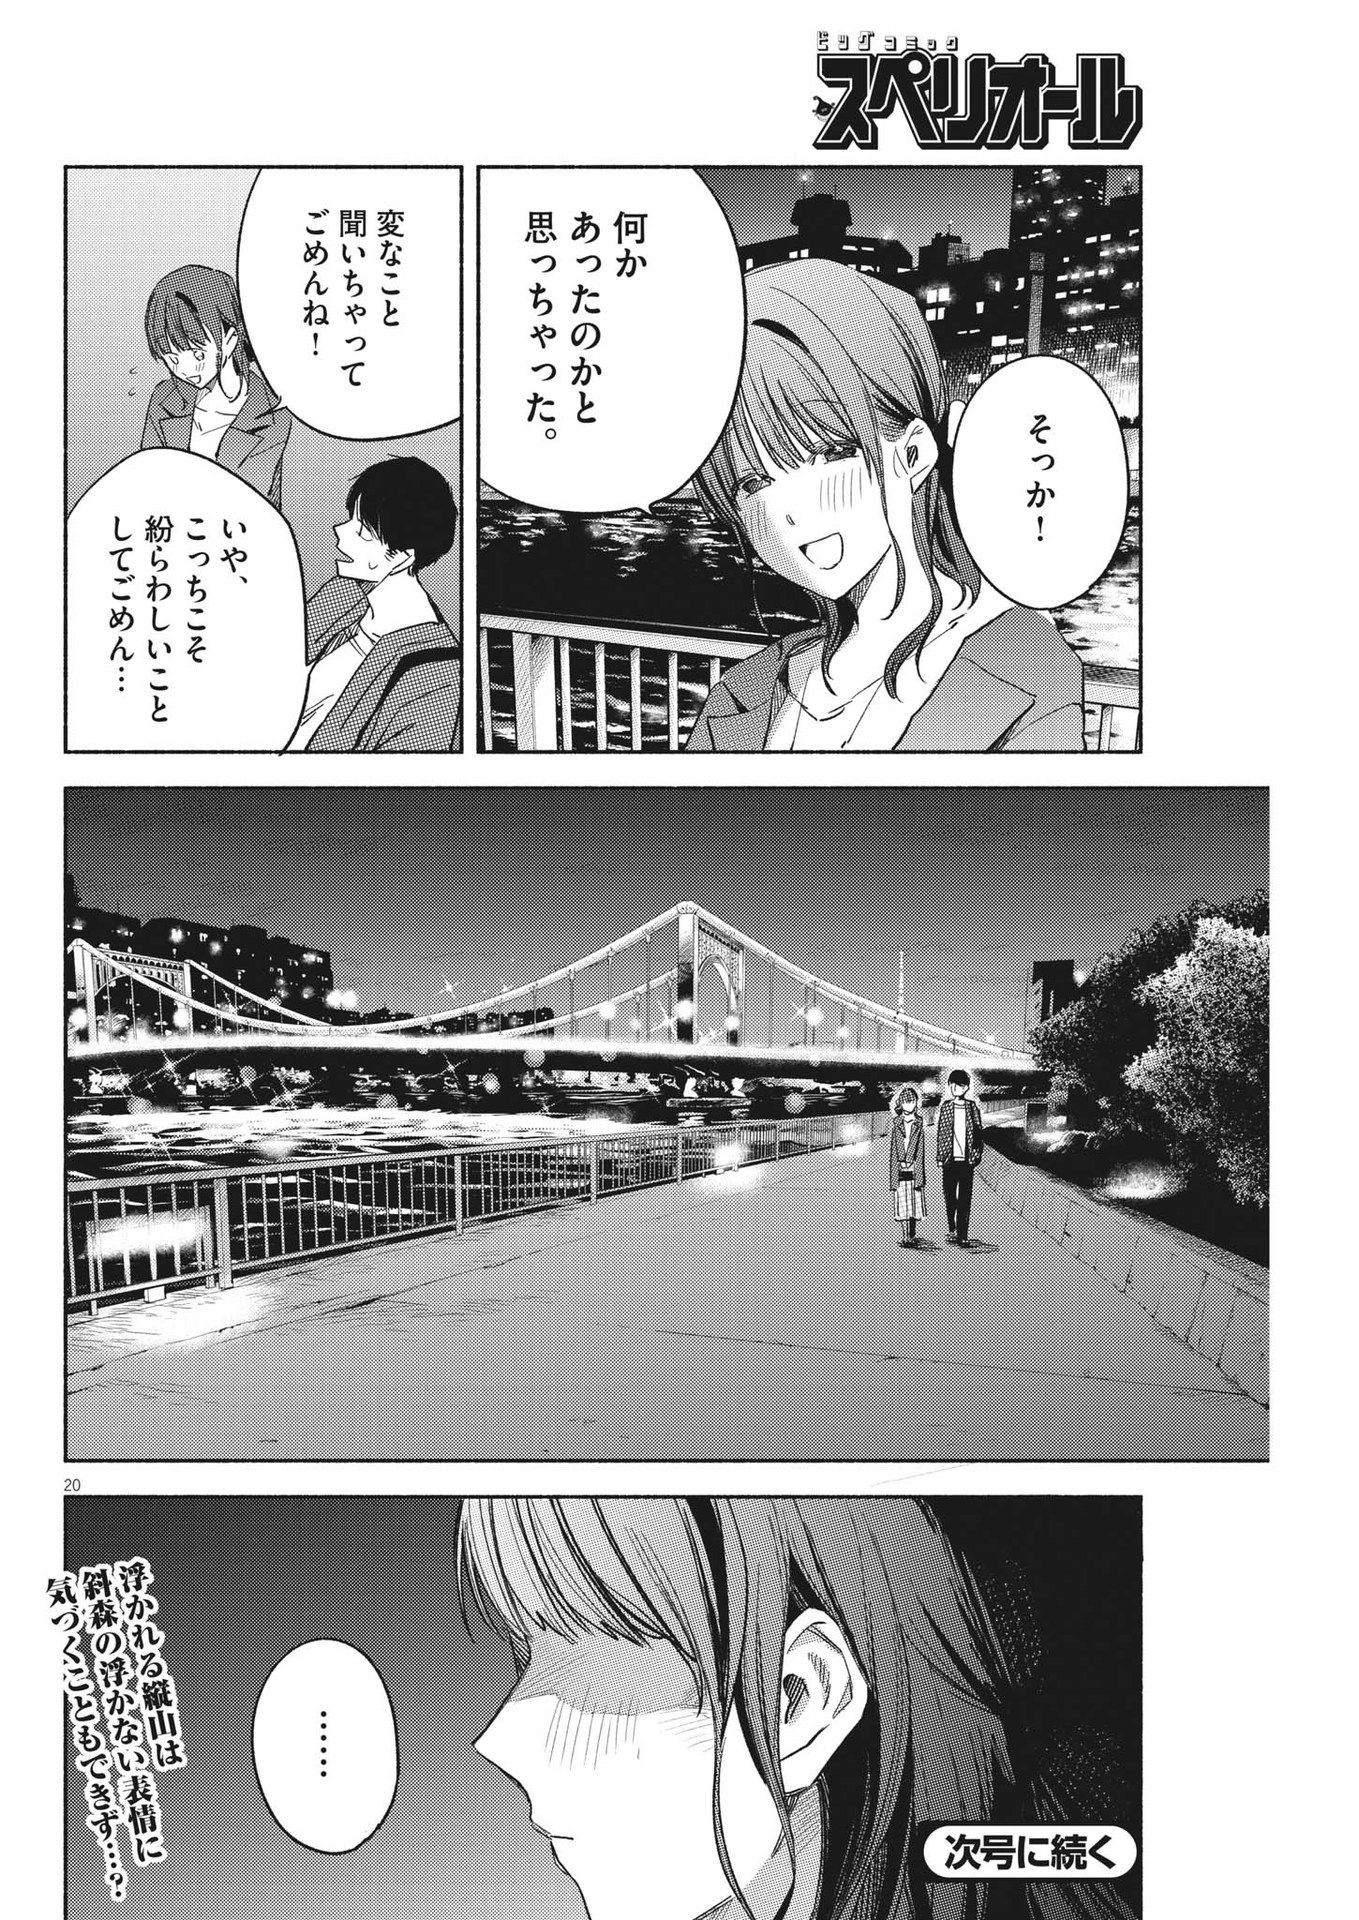 Henshuu no Isshou - Chapter 15 - Page 20